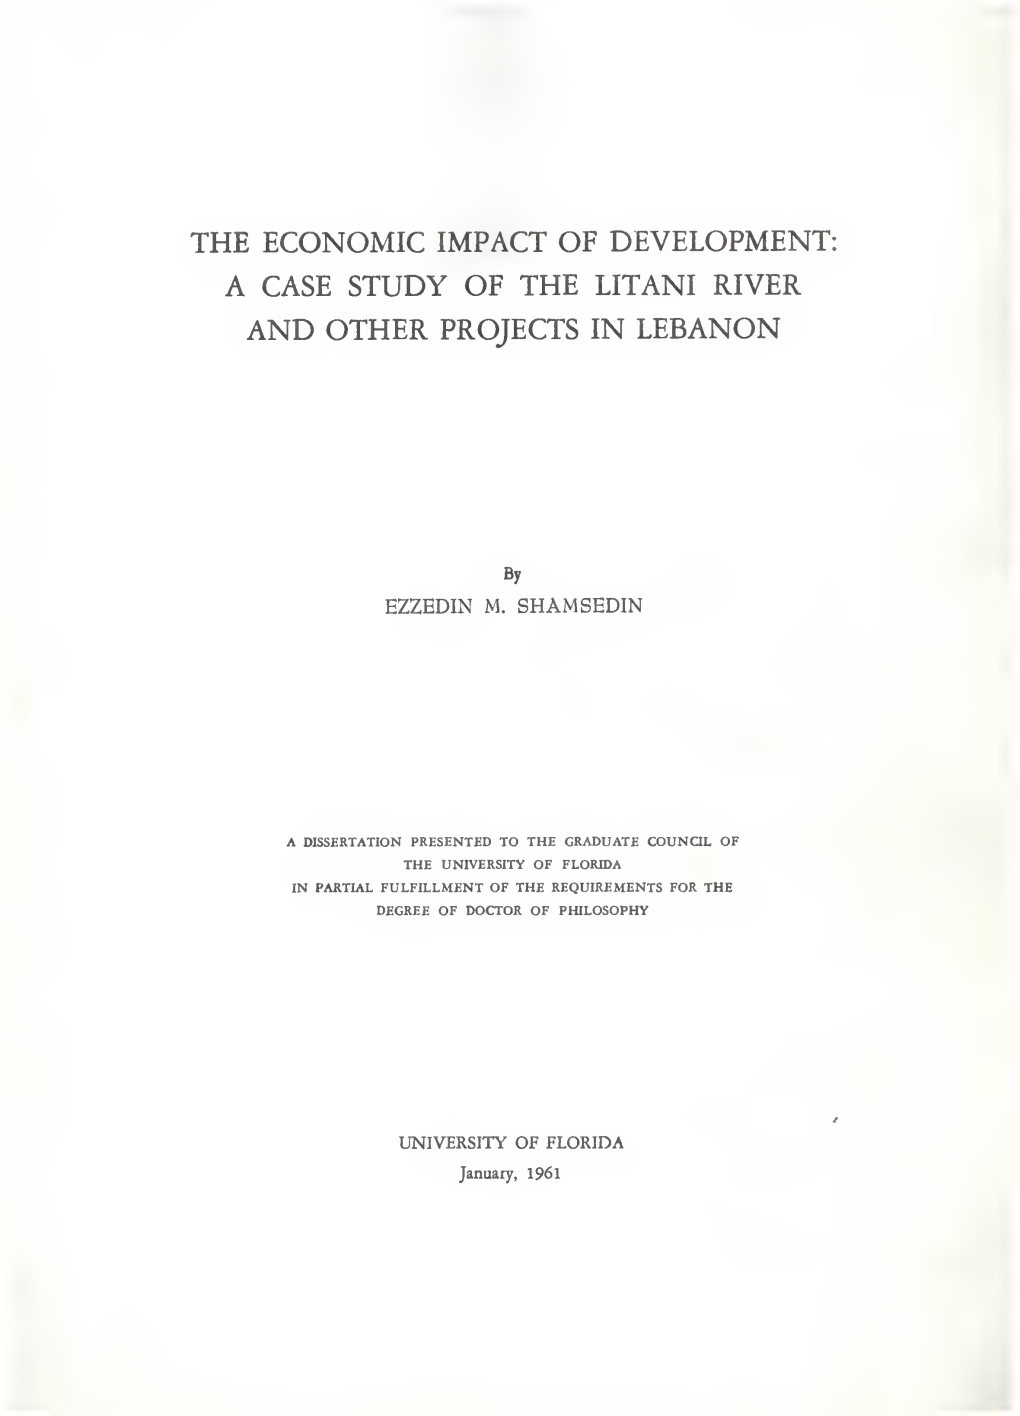 Economic Impact of Development: a Case of The